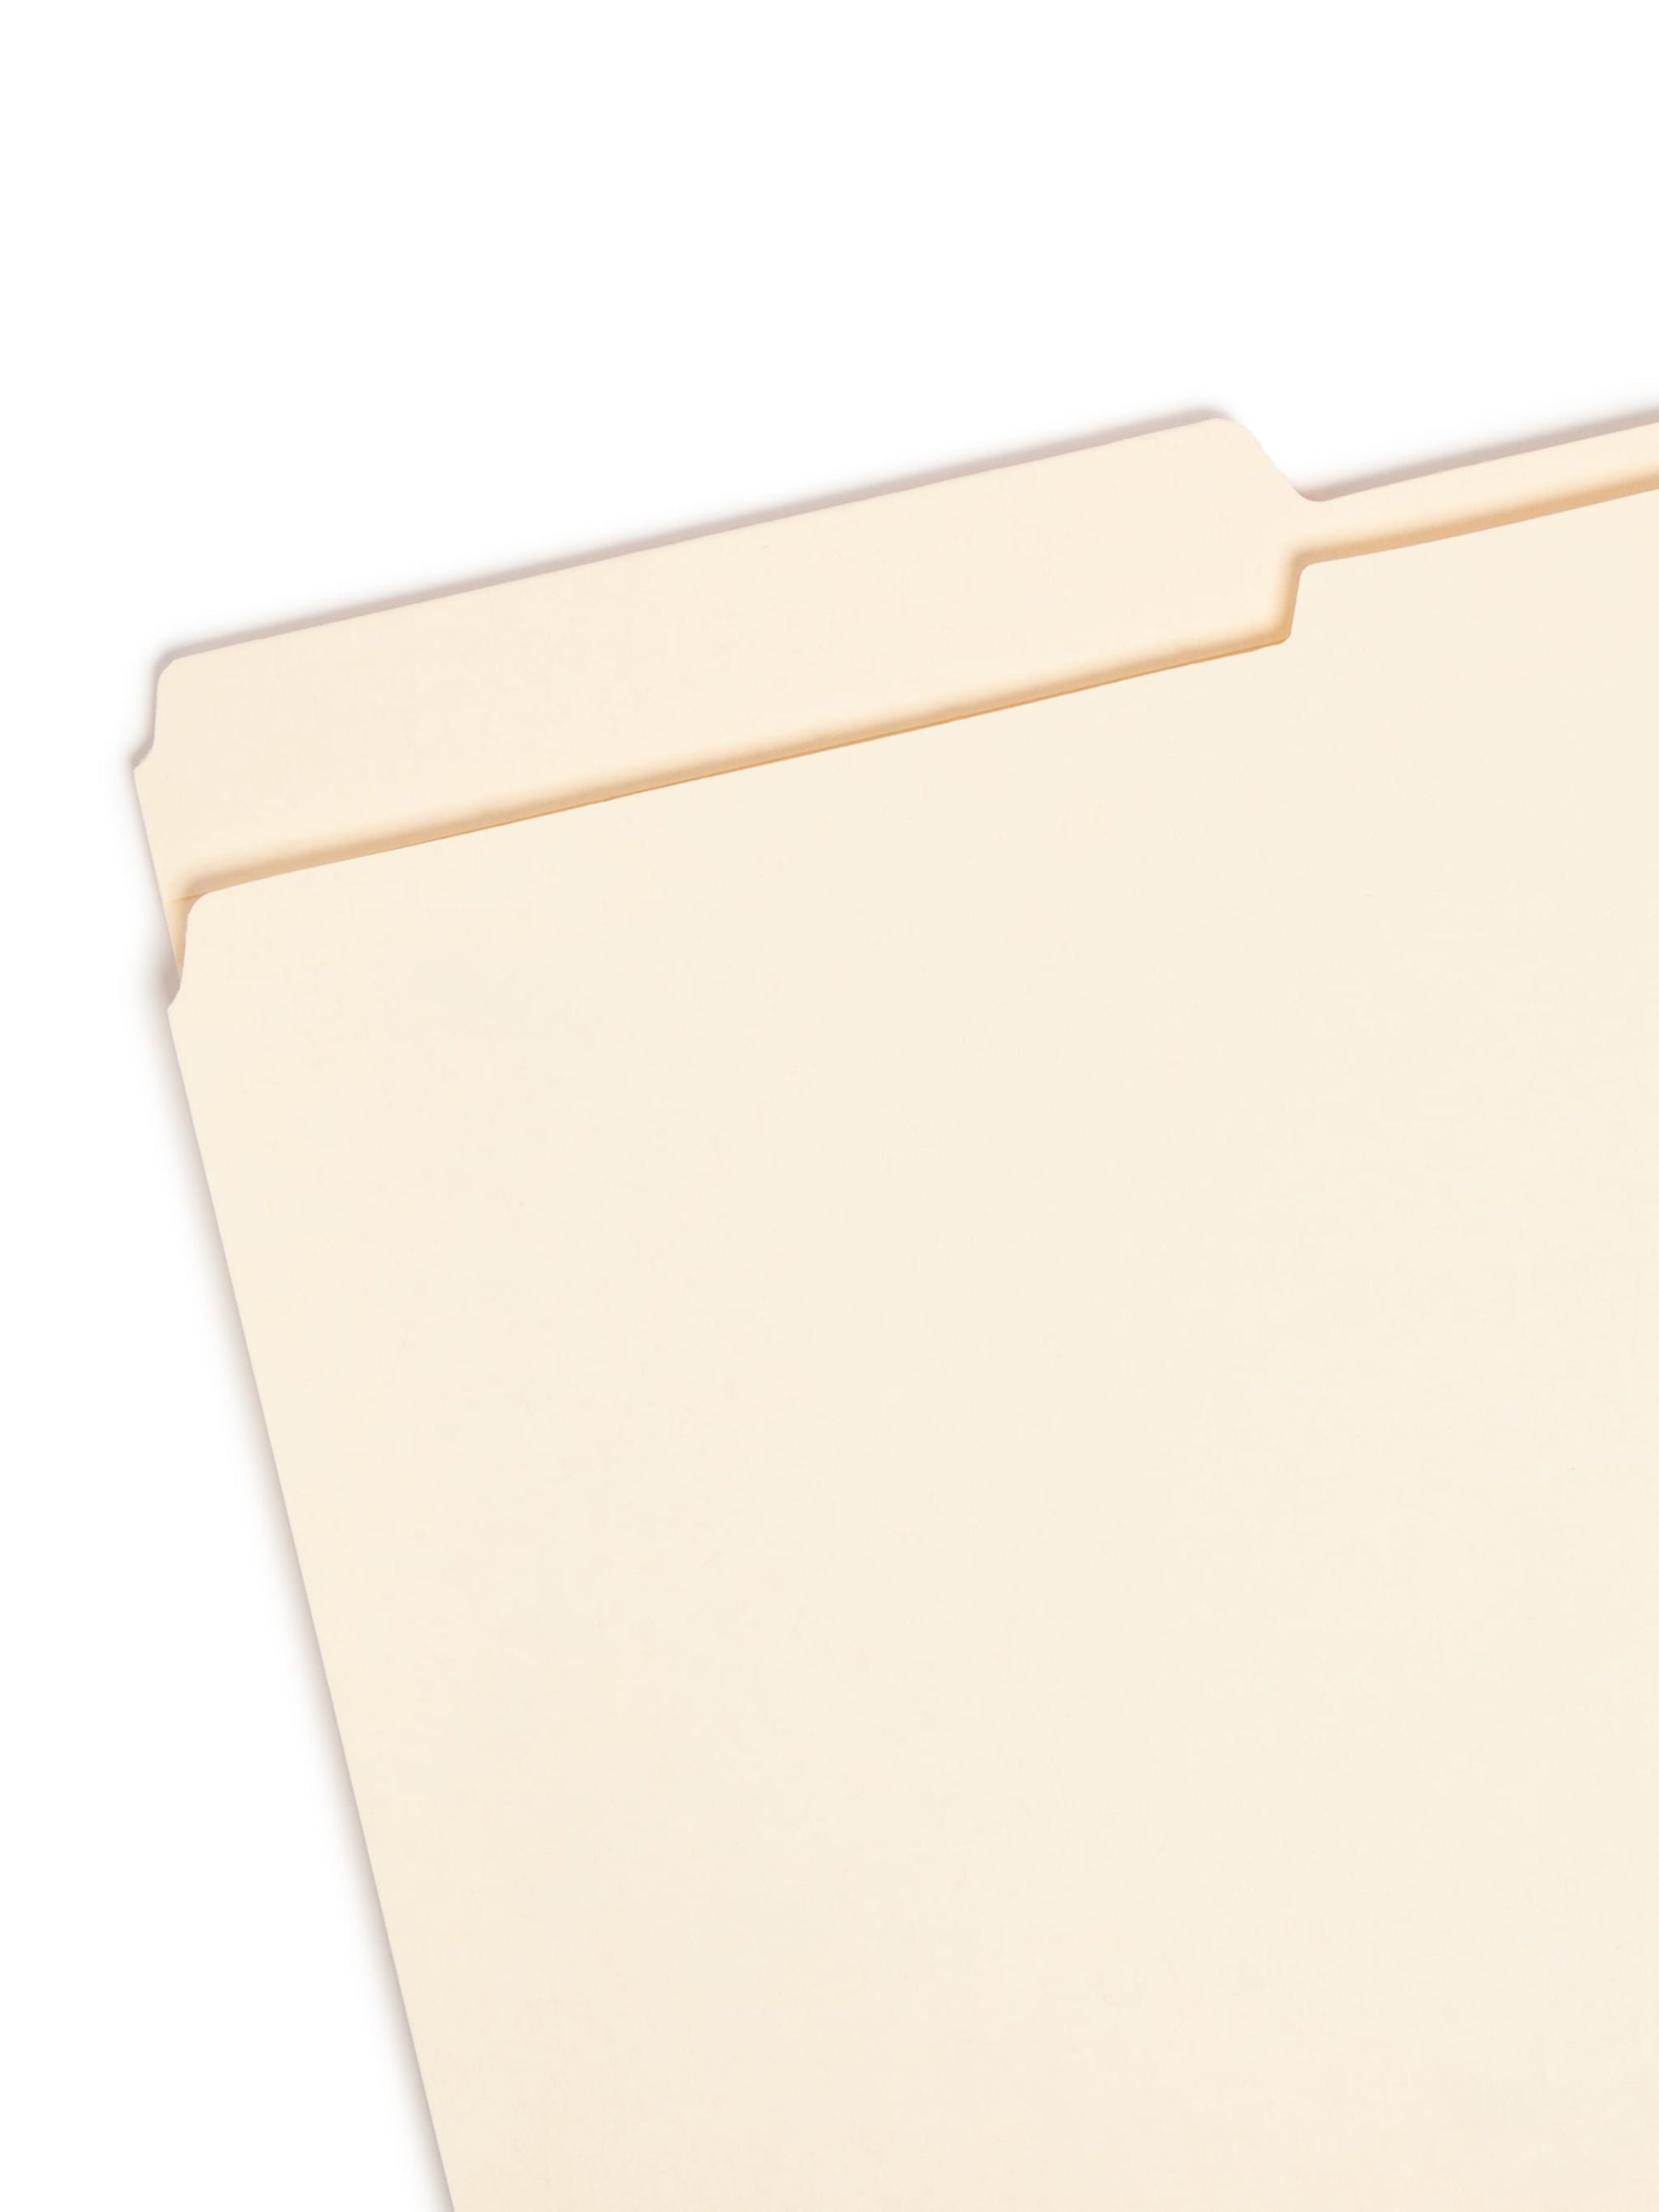 Reinforced Tab File Folders, 1/2-Cut Tab, Manila Color, Letter Size, Set of 100, 086486103268